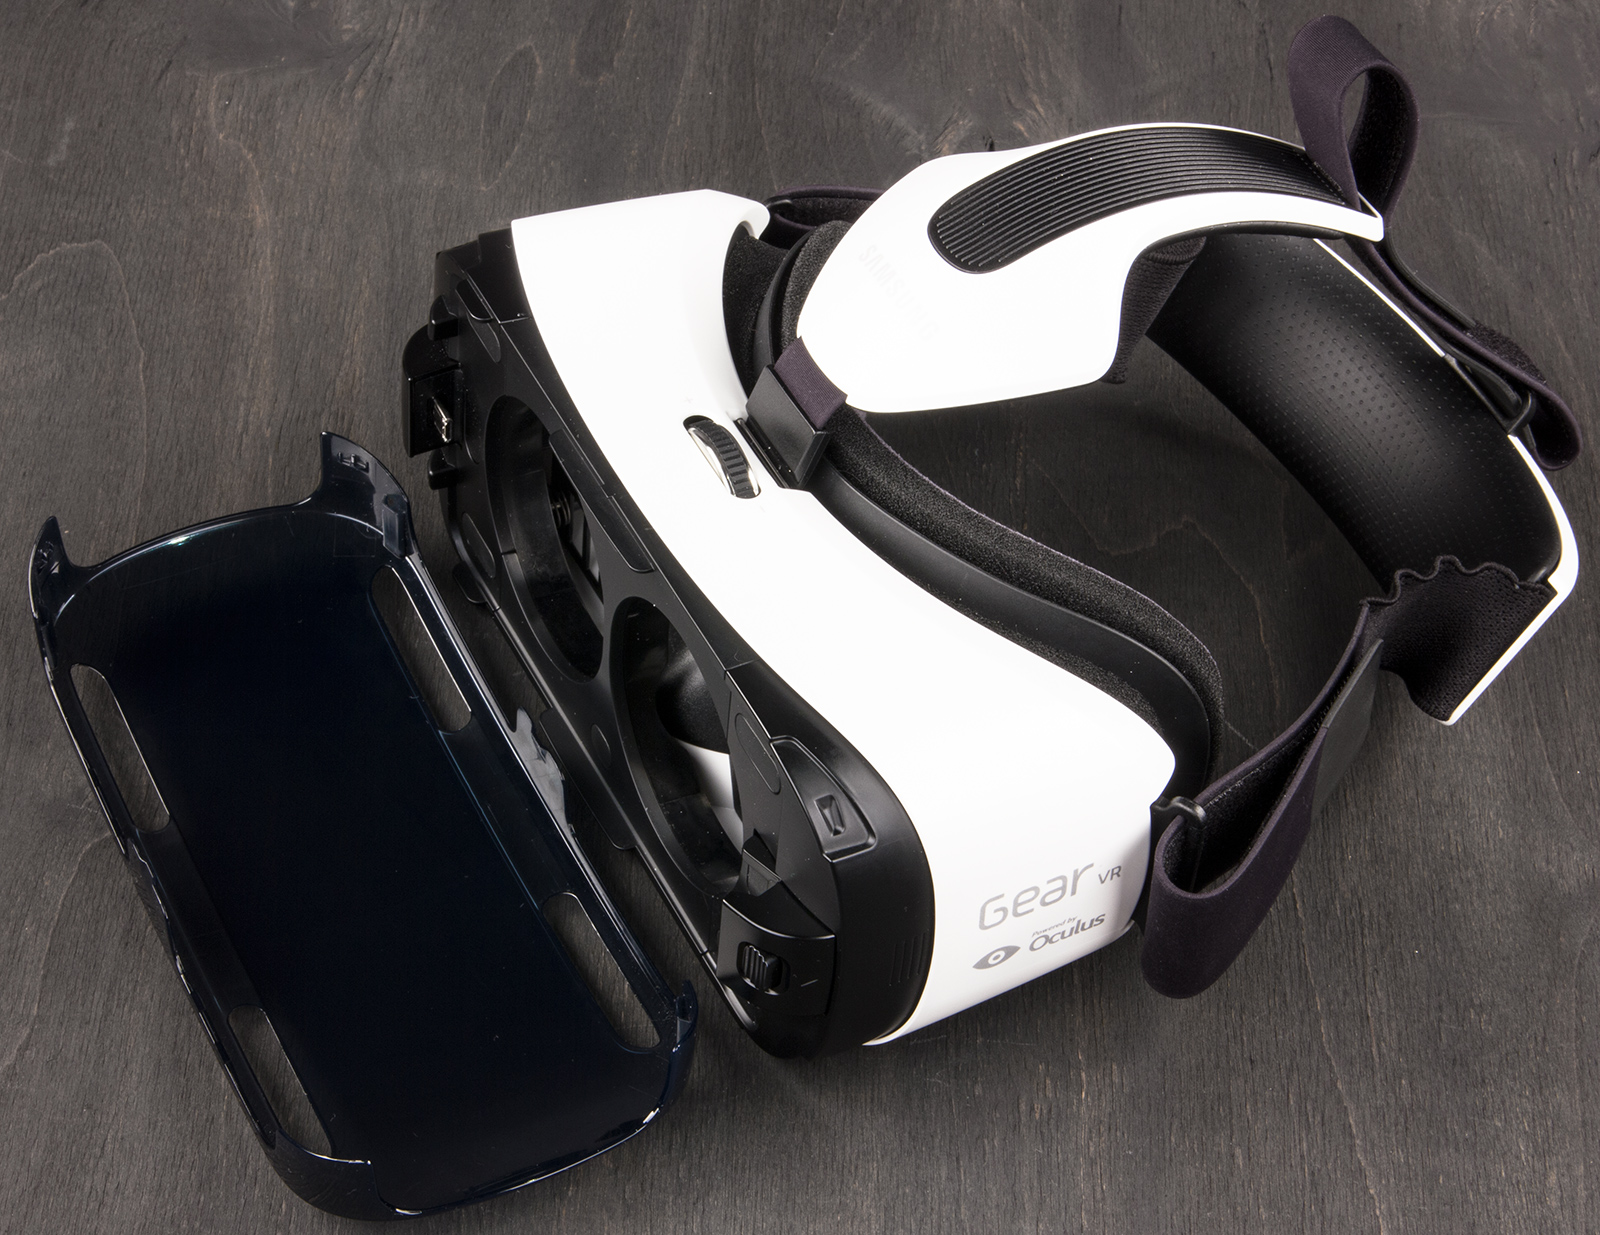 Samsung vr oculus. VR шлем самсунг. Samsung Gear VR. Шлем виртуальной реальности Topsky VG-280. Очки виртуальной реальности самсунг Gear VR.